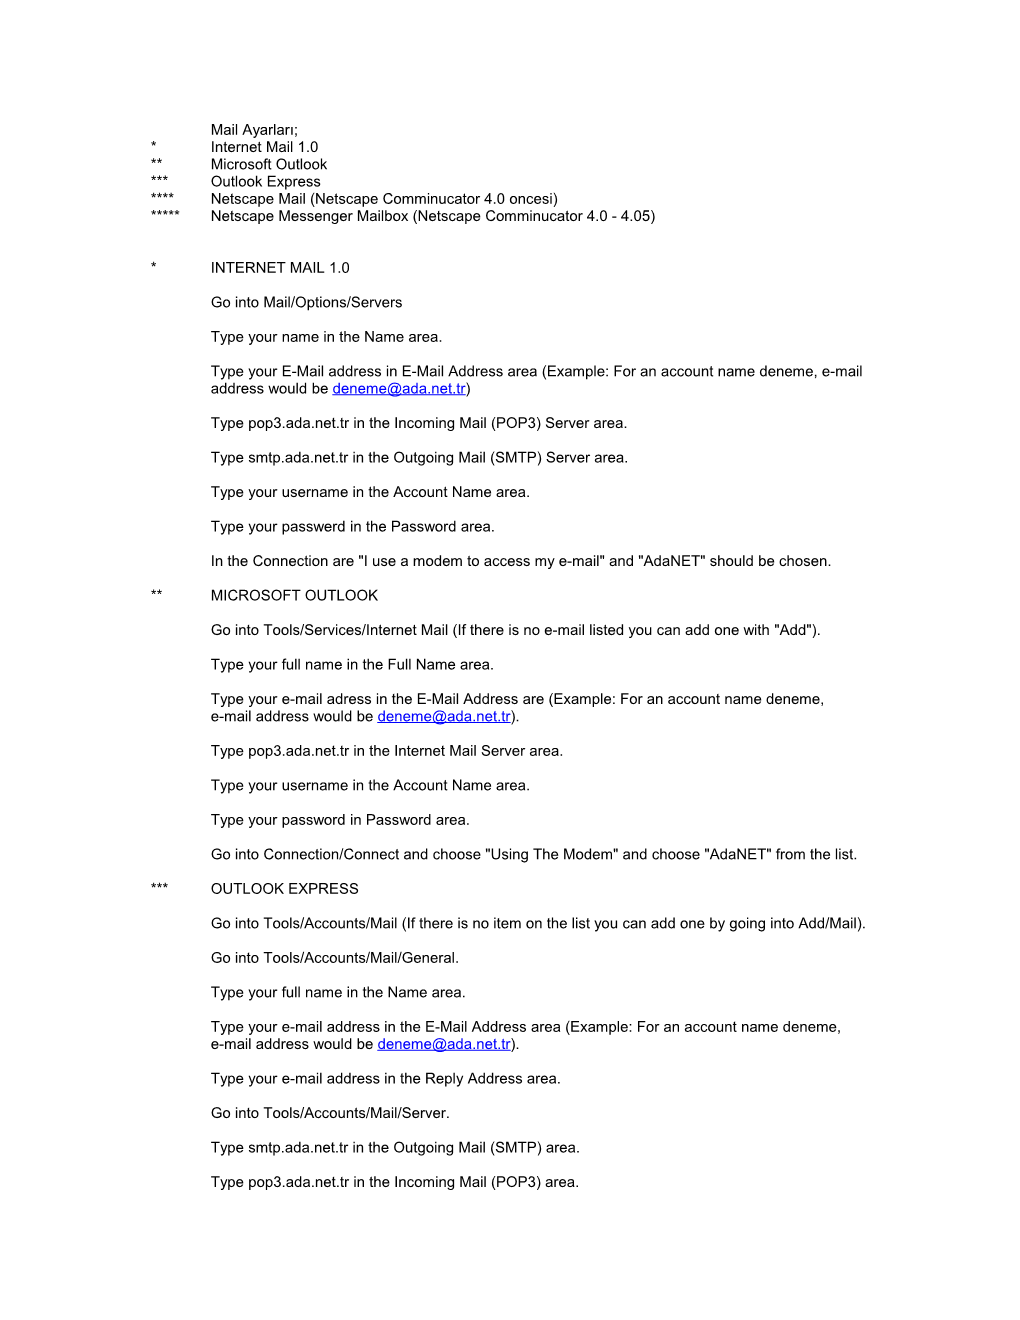 Netscape Mail (Netscape Comminucator 4.0 Oncesi)